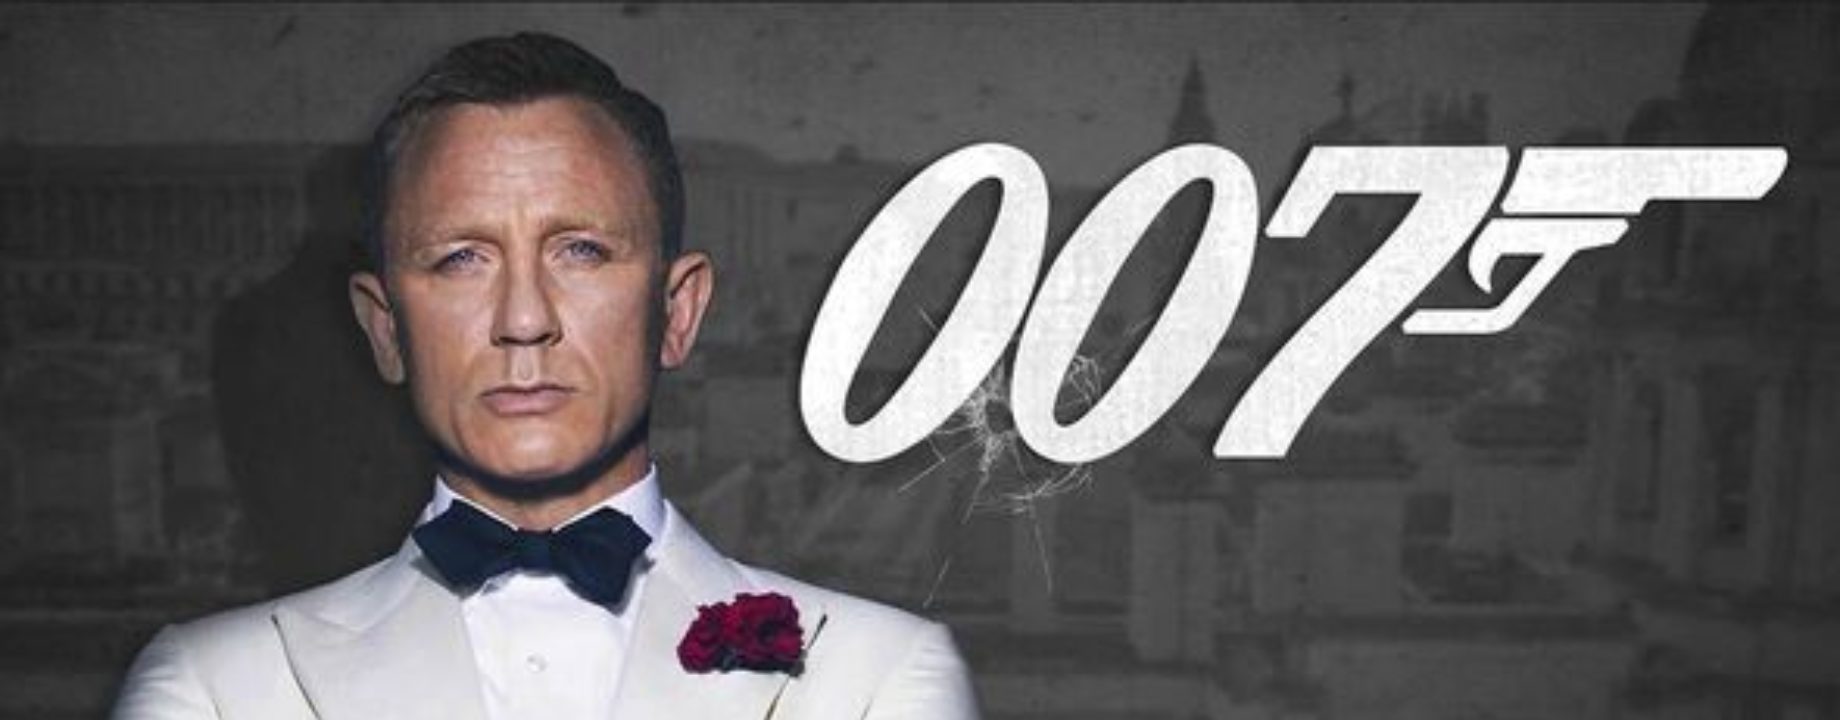 10 best James Bond movies ever ranked